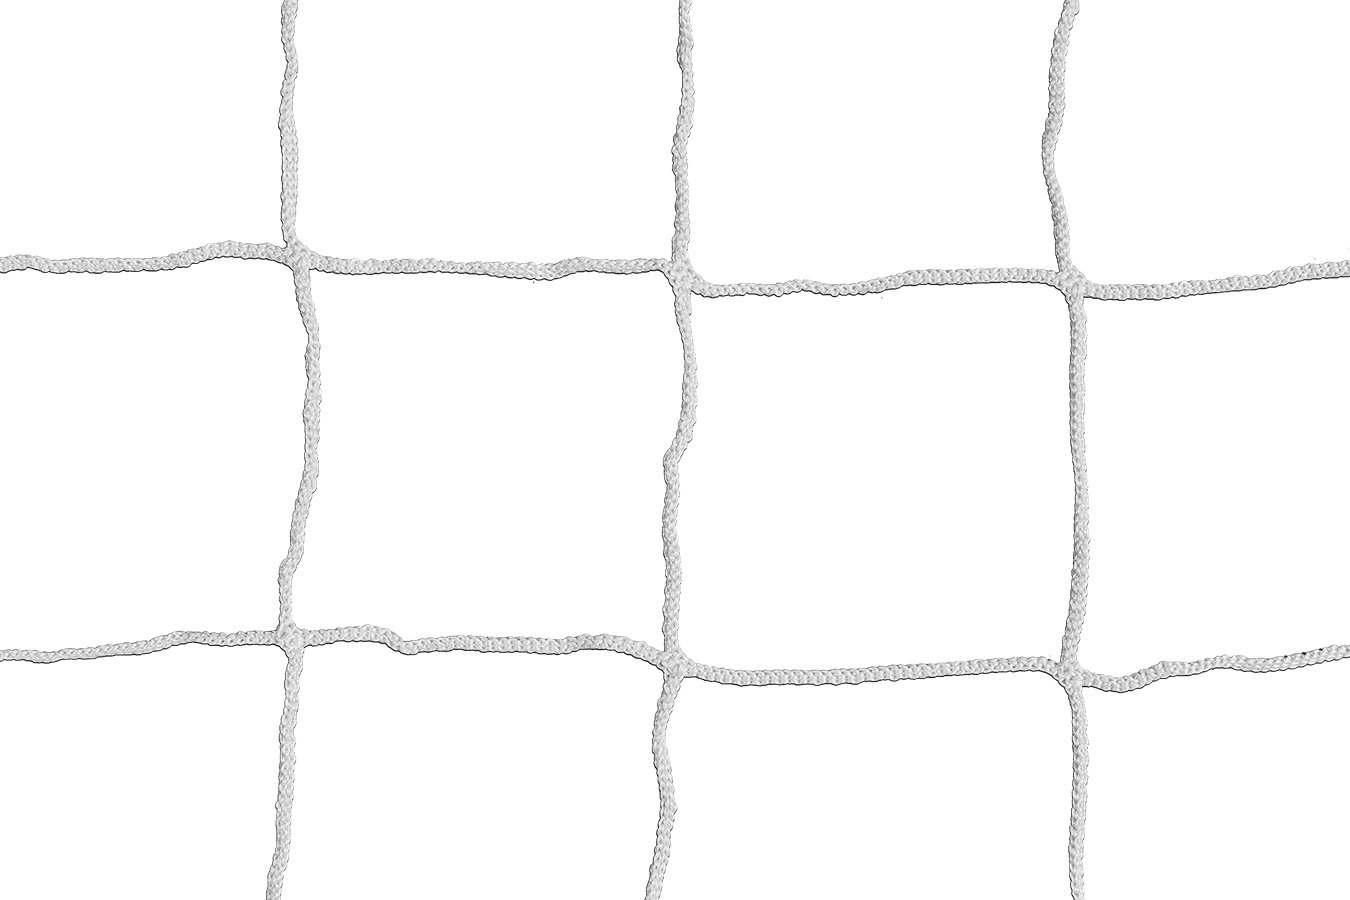 Kwikgoal 3mm Solid Braid Knotless Net | 3B5821 Nets Kwikgoal 